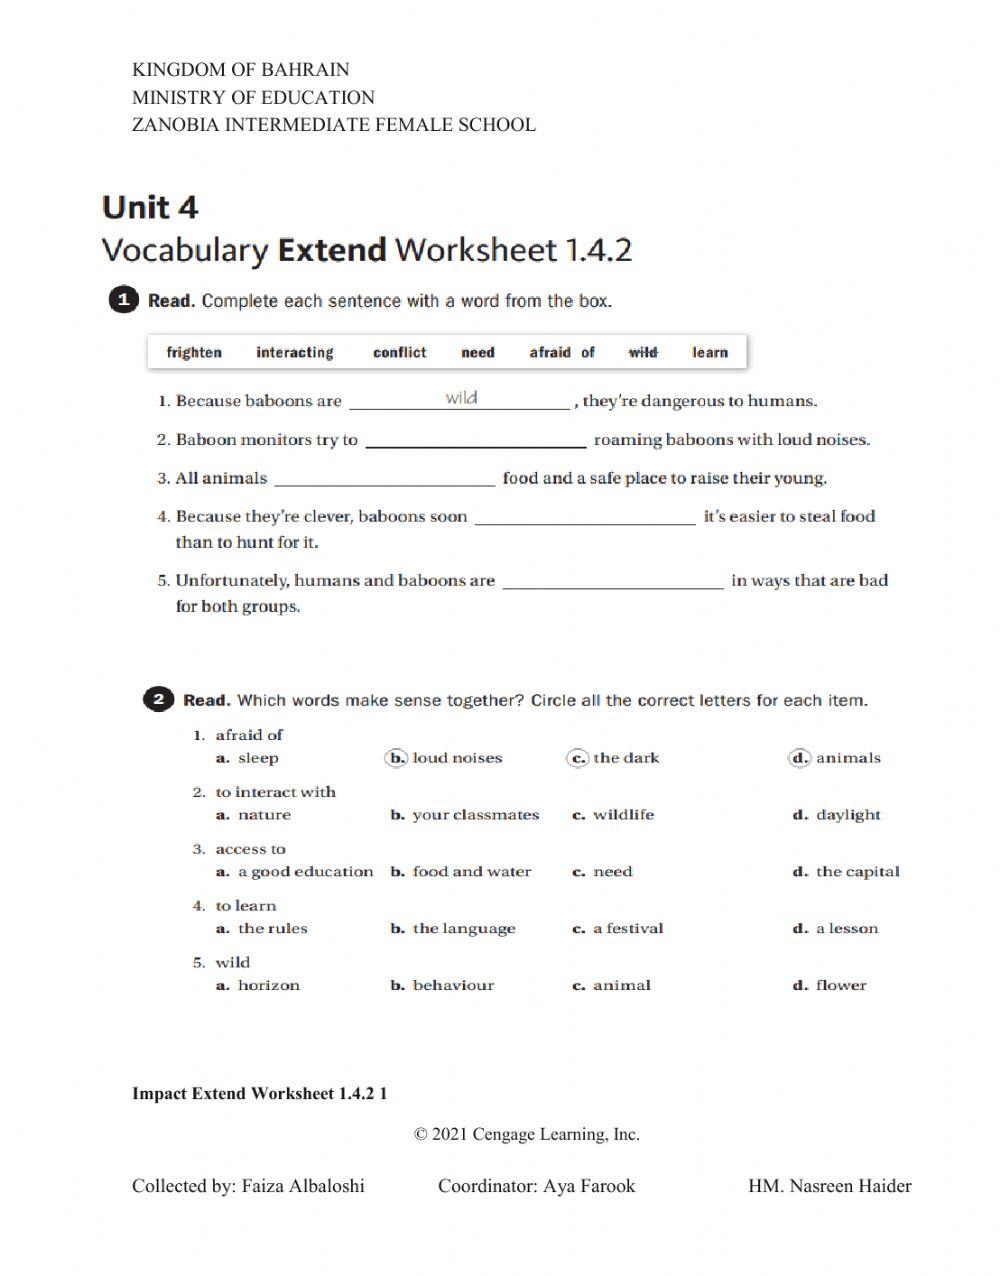 Vocabulary Extend Worksheet